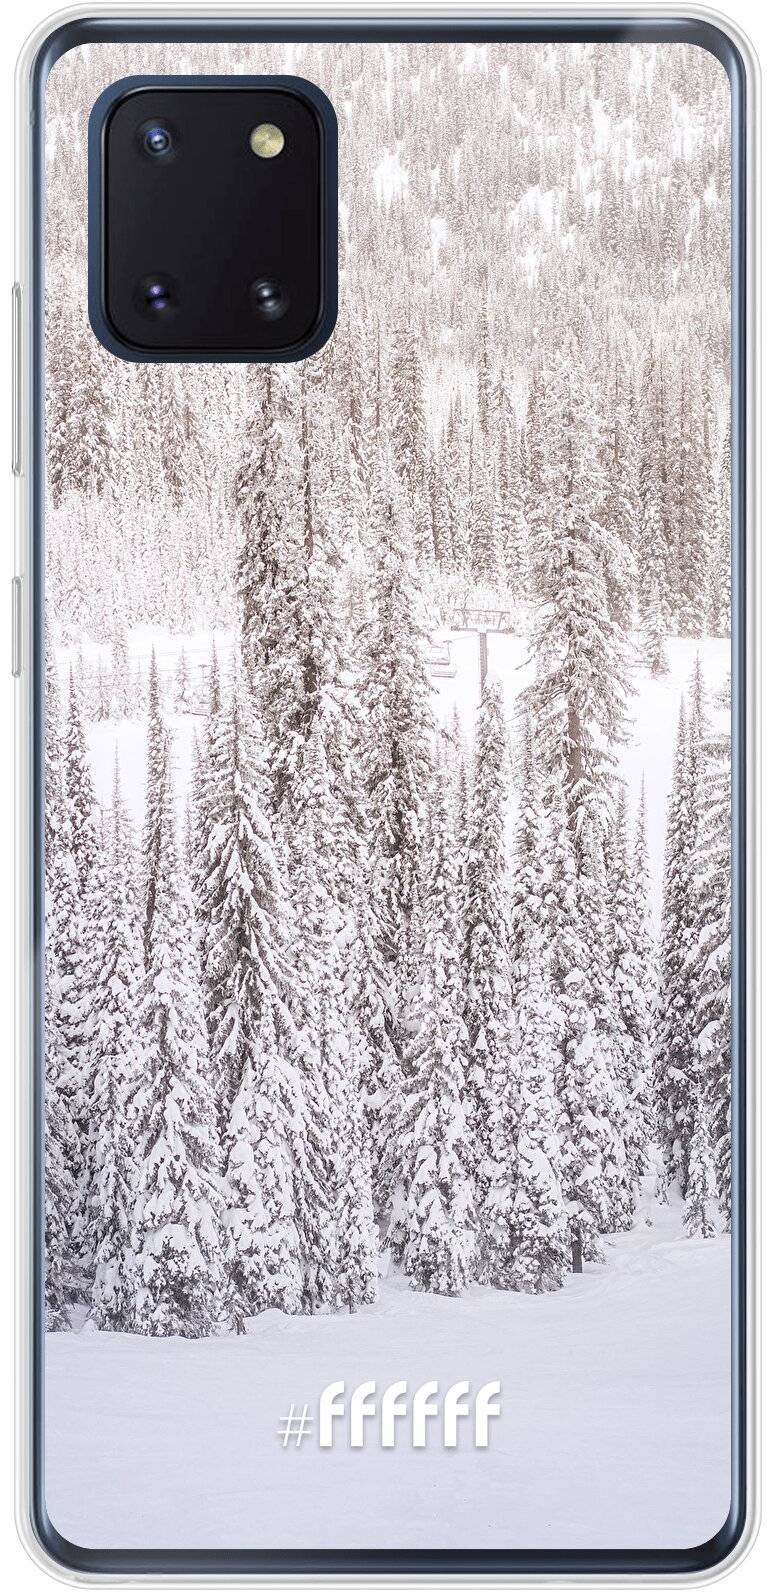 Snowy Galaxy Note 10 Lite